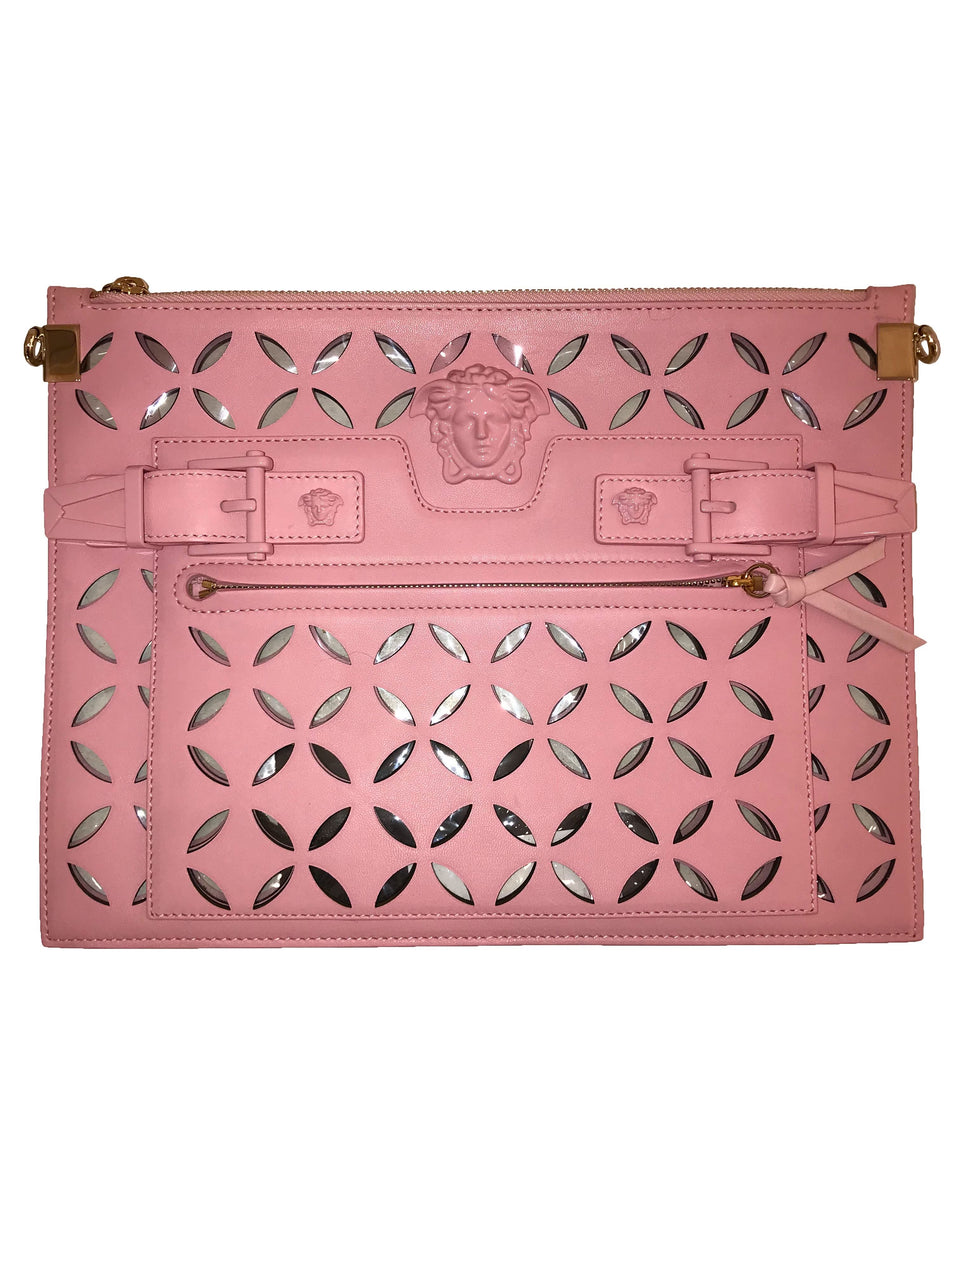 Versace Pink Laser Cut Leather Clutch